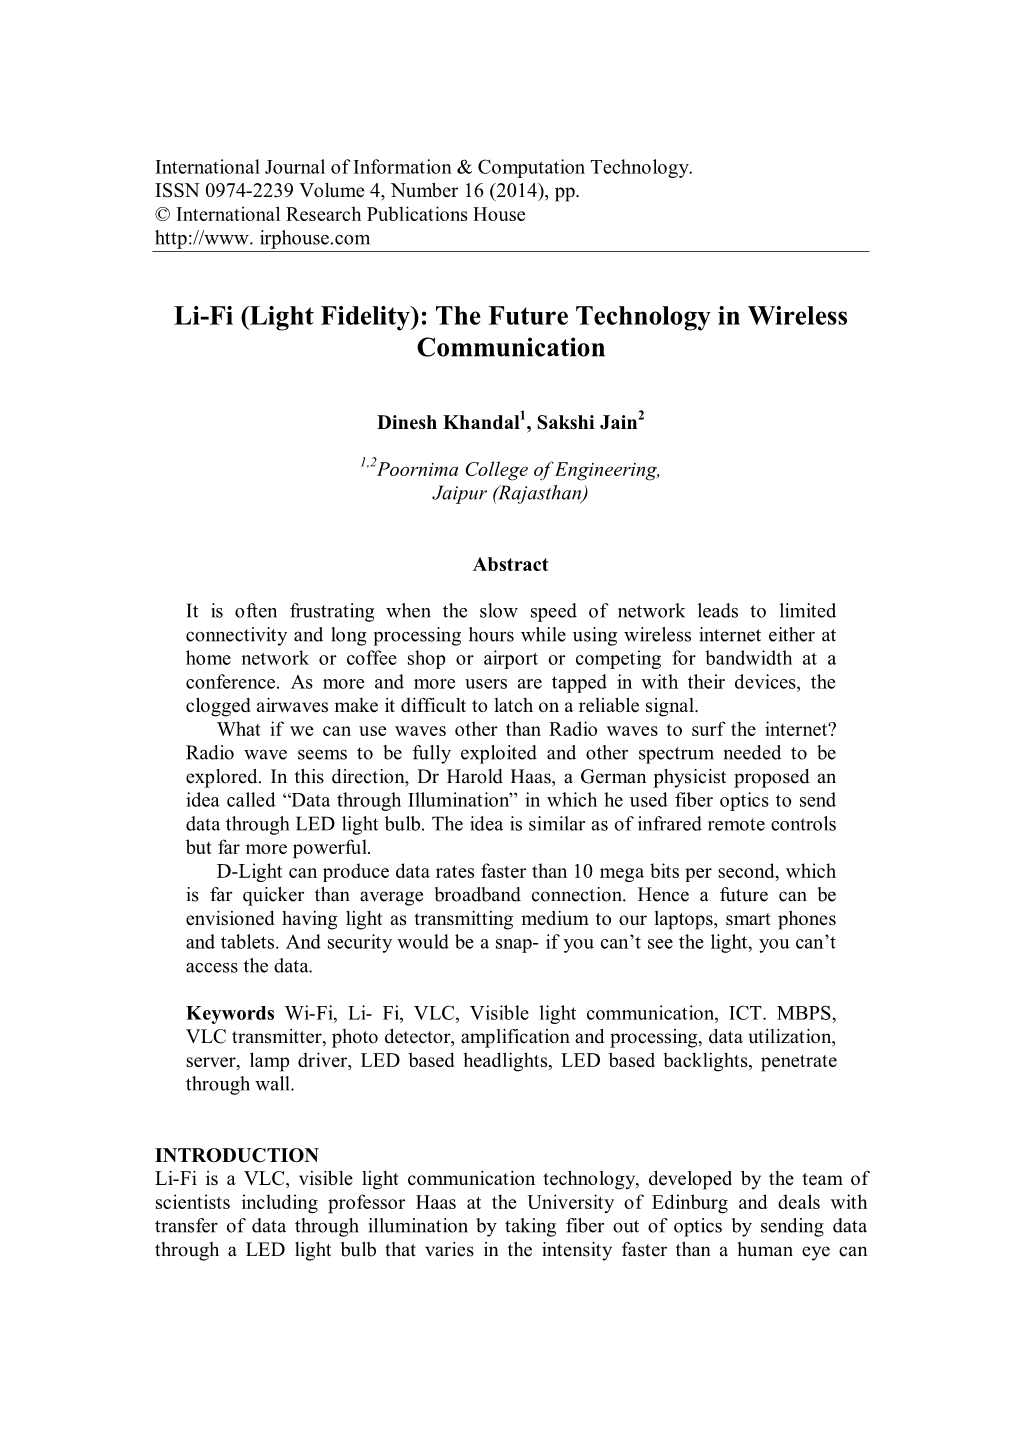 Li-Fi (Light Fidelity): the Future Technology in Wireless Communication